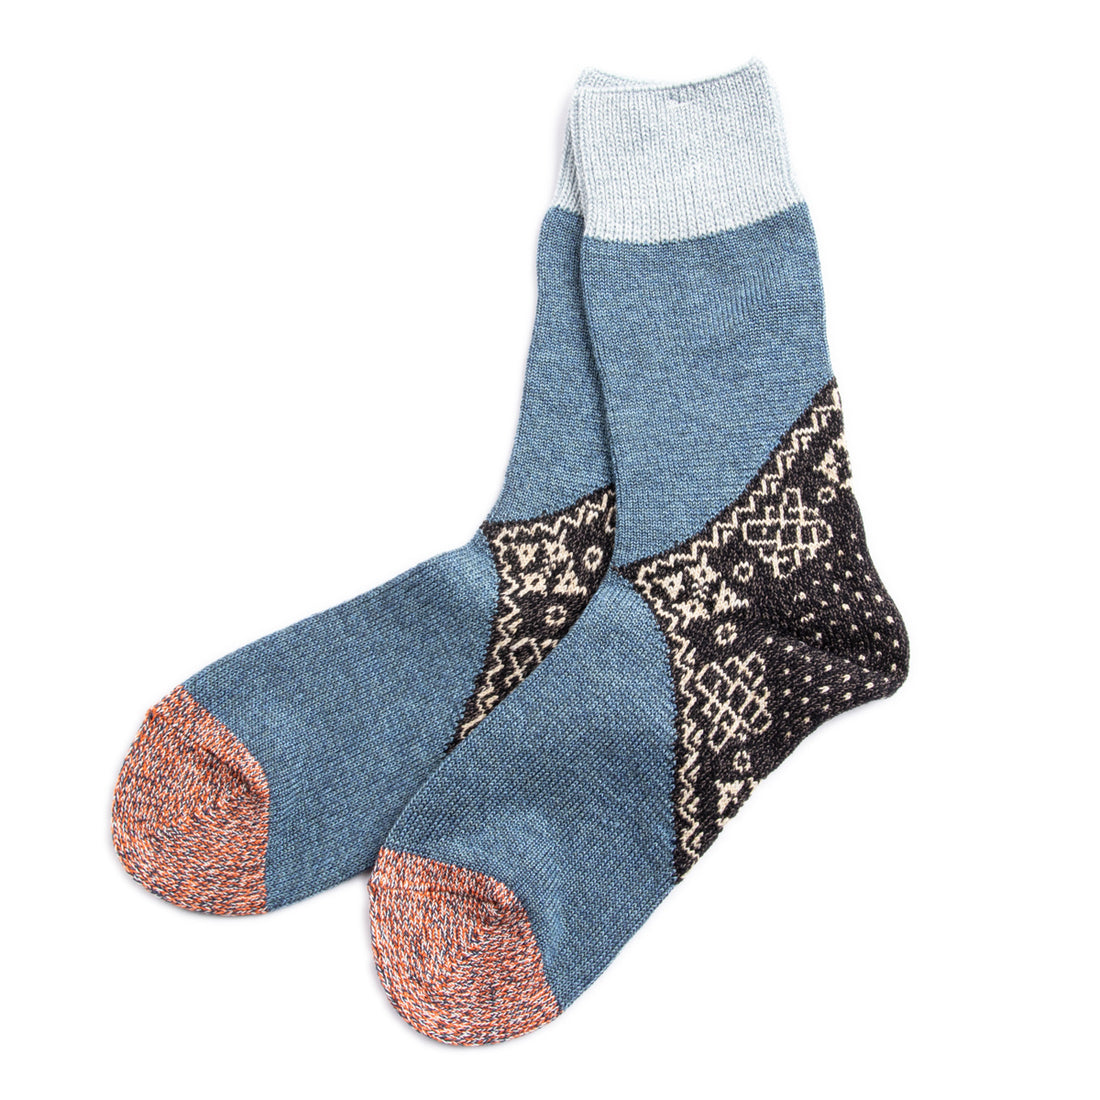 Kapital 96 Yarns Wool Heel Bandana Socks - Black - Standard & Strange